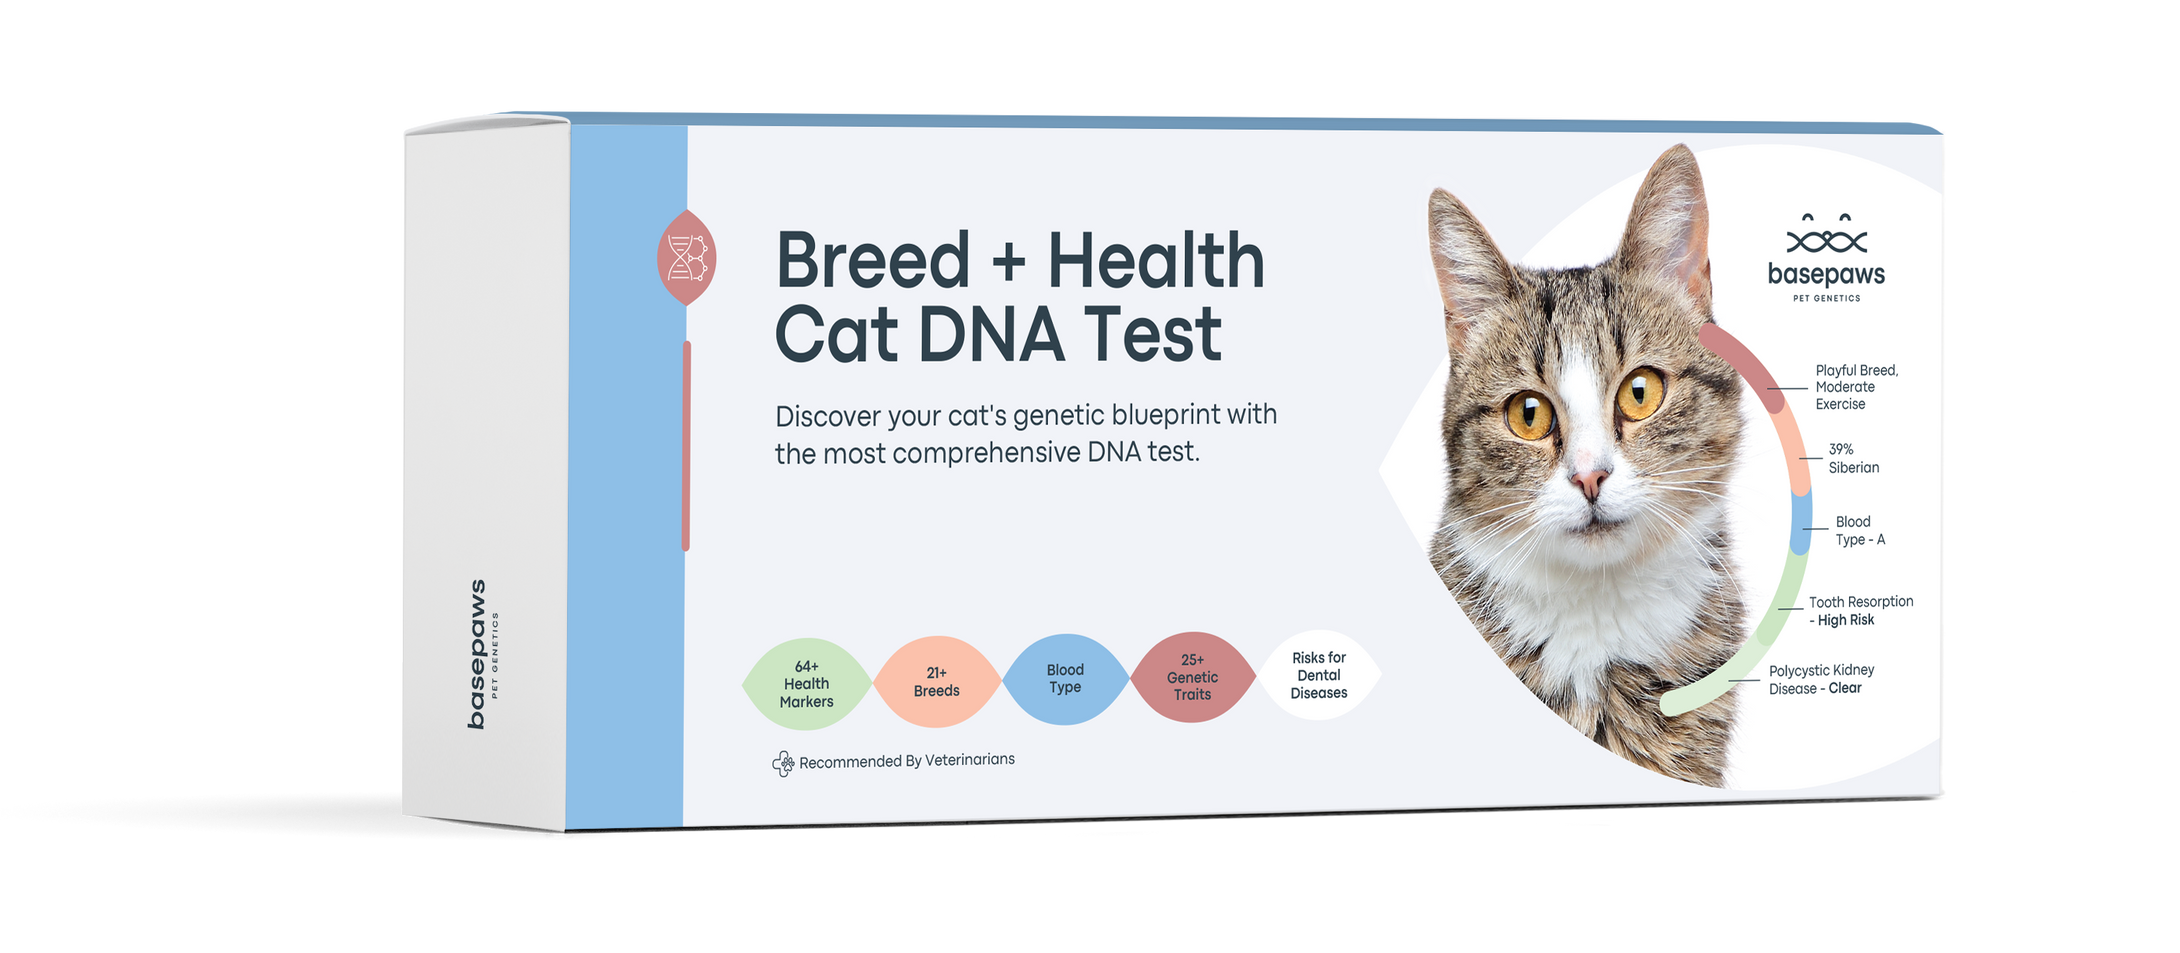 10 Cat DNA Tests